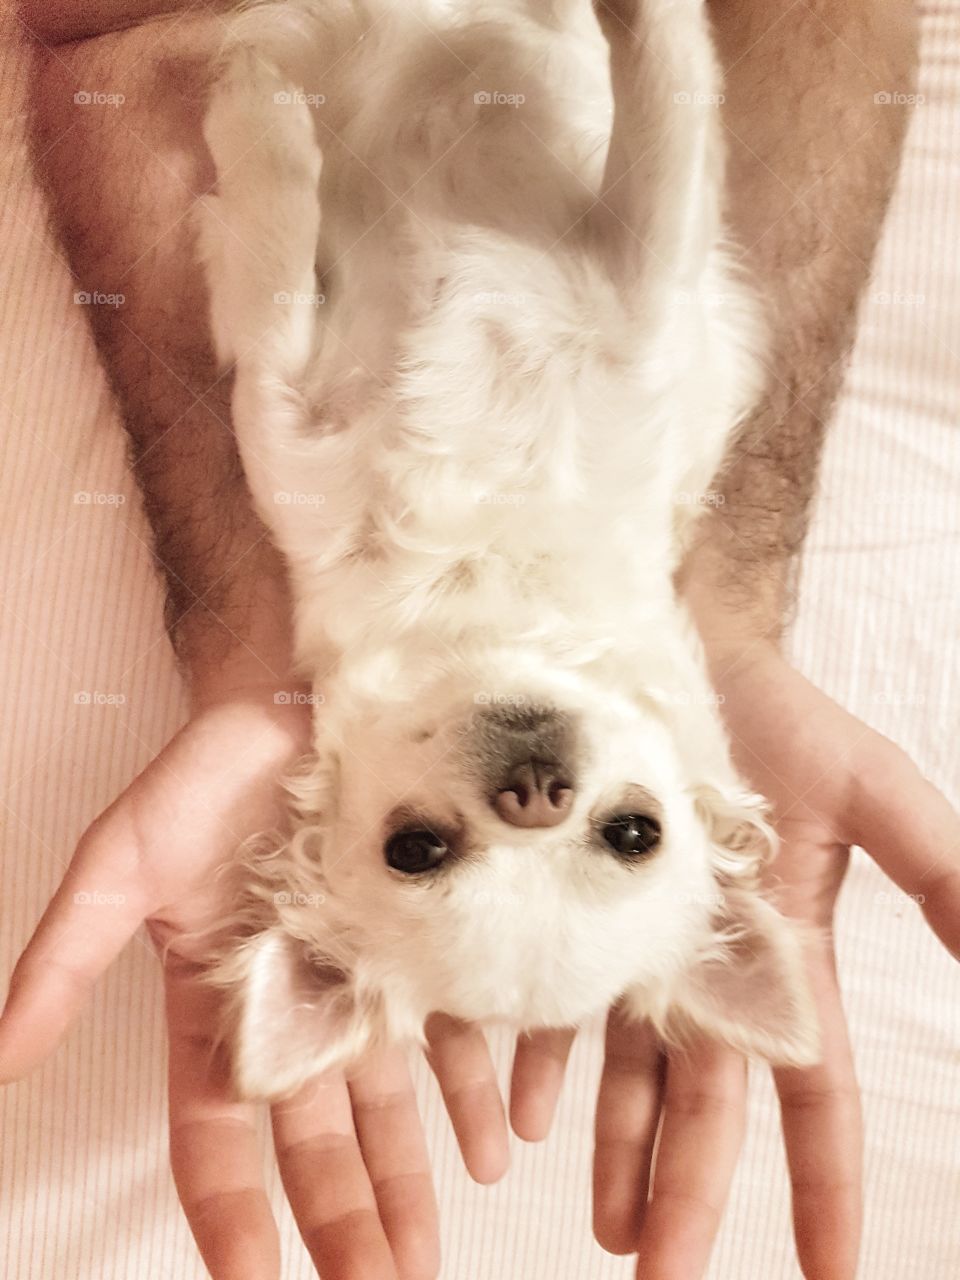 White chihiahua dog in hands